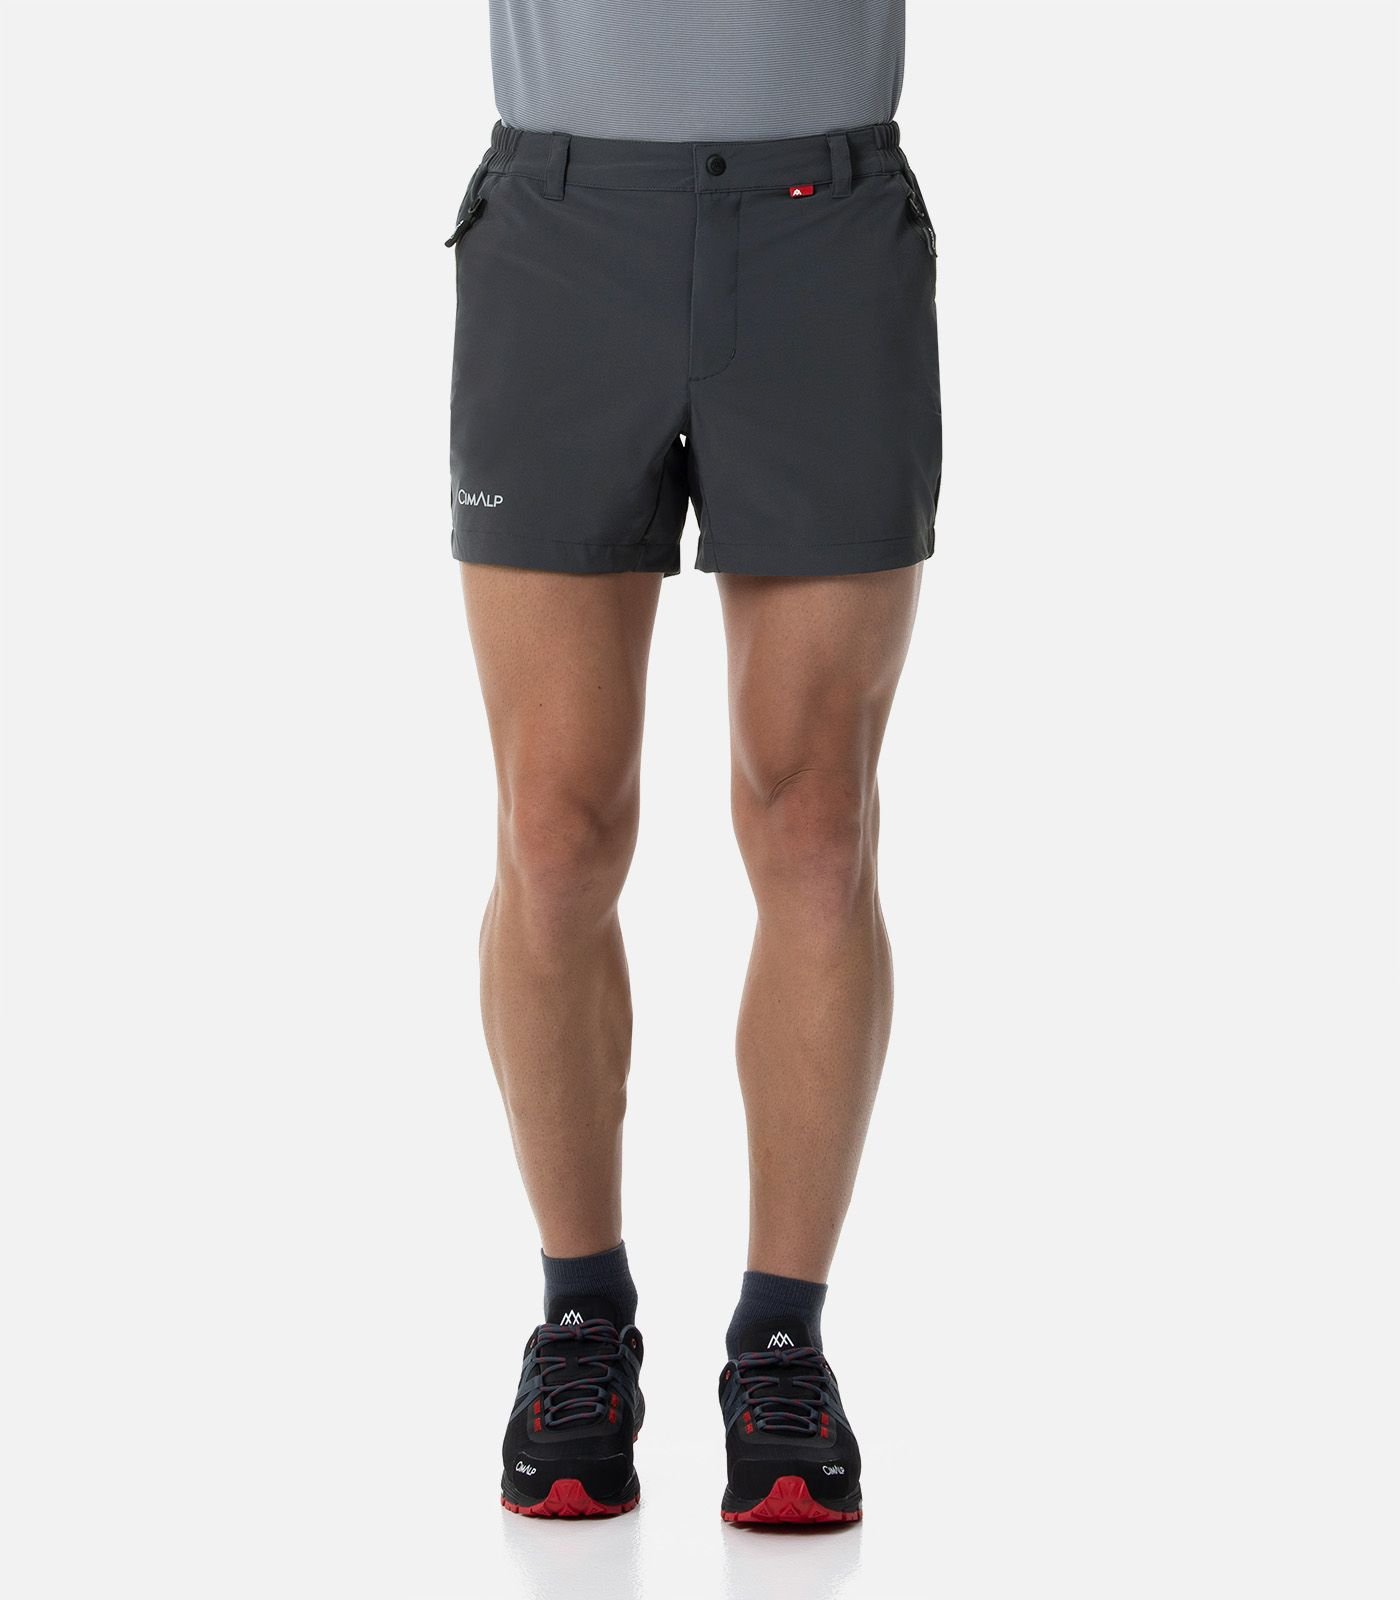 Hiking shorts - short version